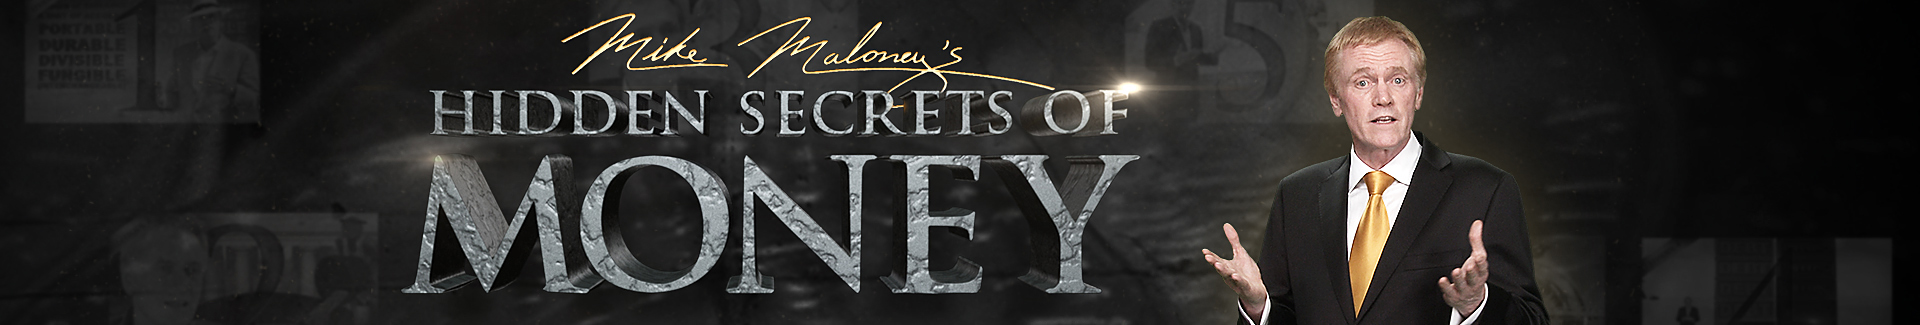 Mike Maloney Dedicates Upcoming Hidden Secrets of Money Episode 4 to Ron Paul